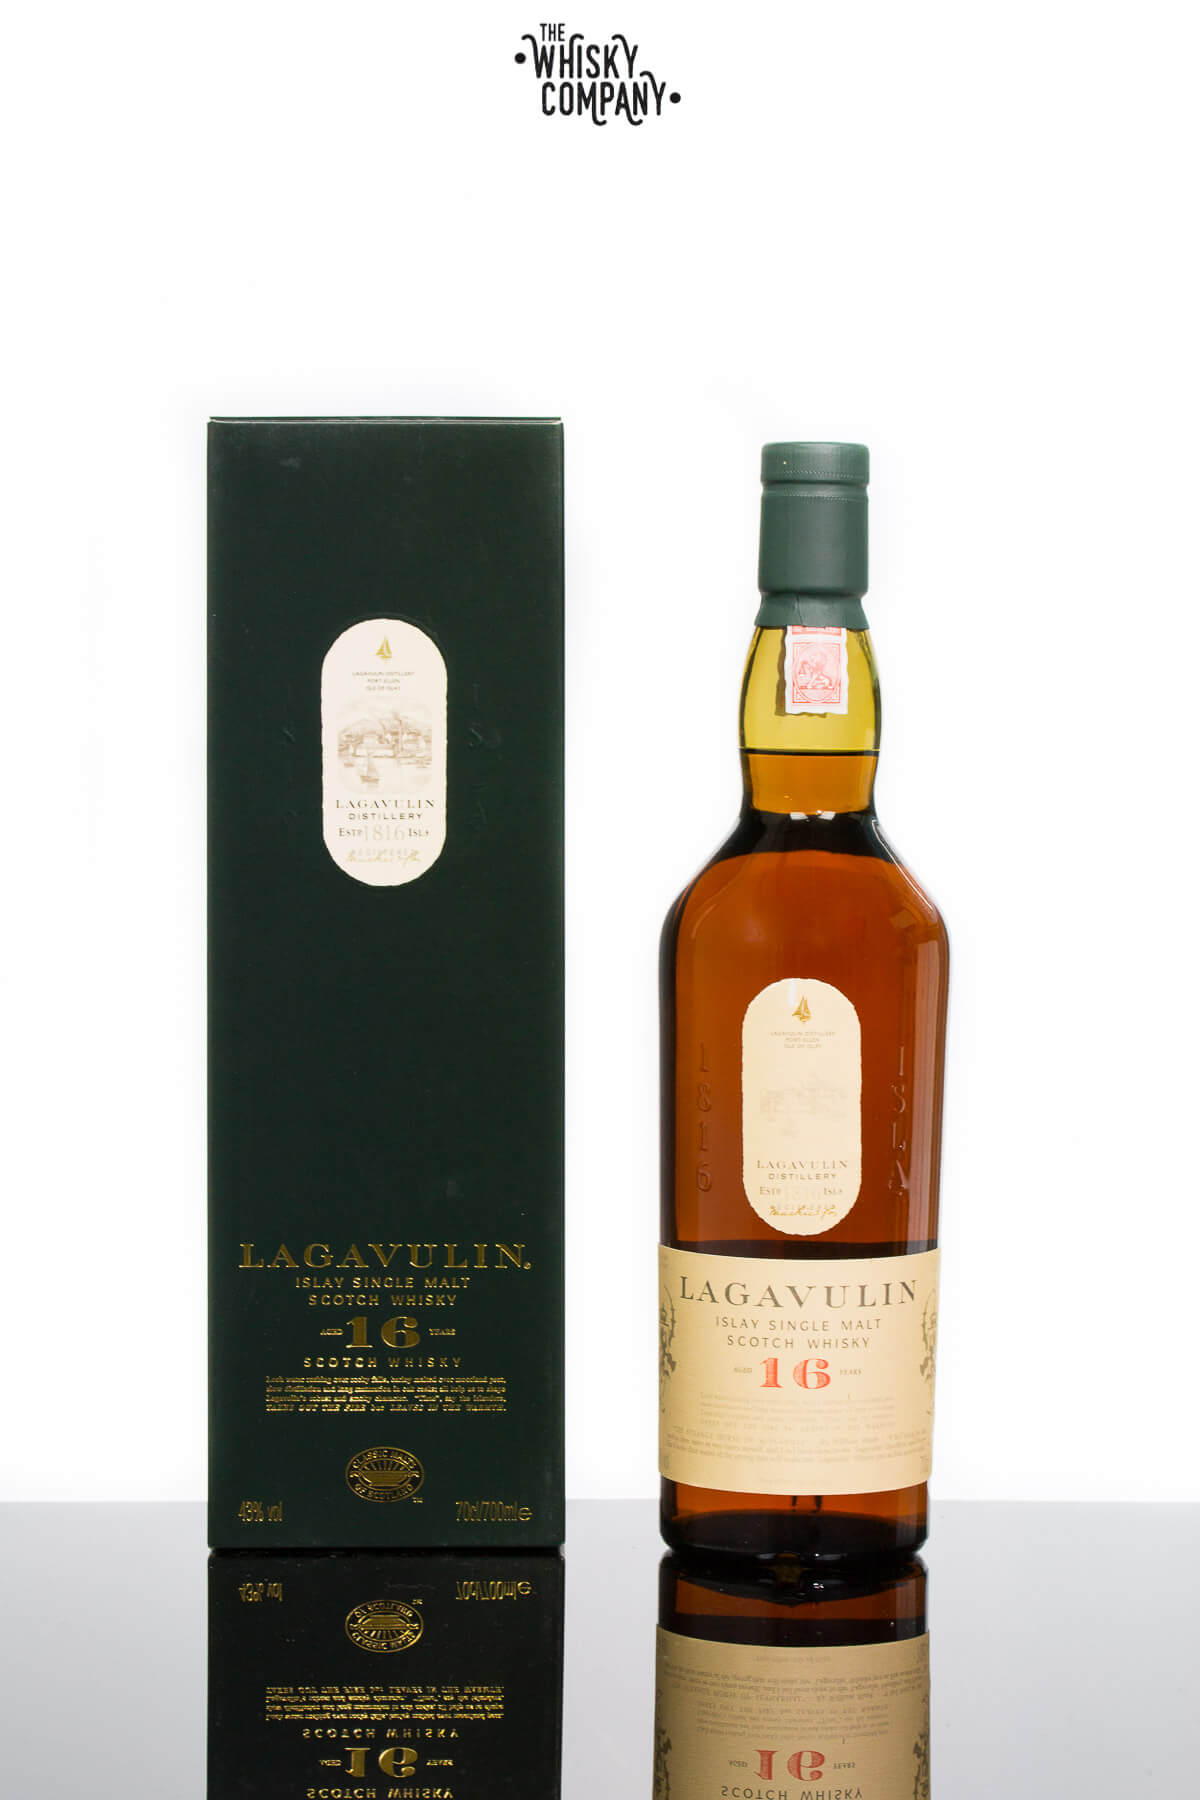 Lagavulin Aged 16 Years, Islay Scotch Whisky